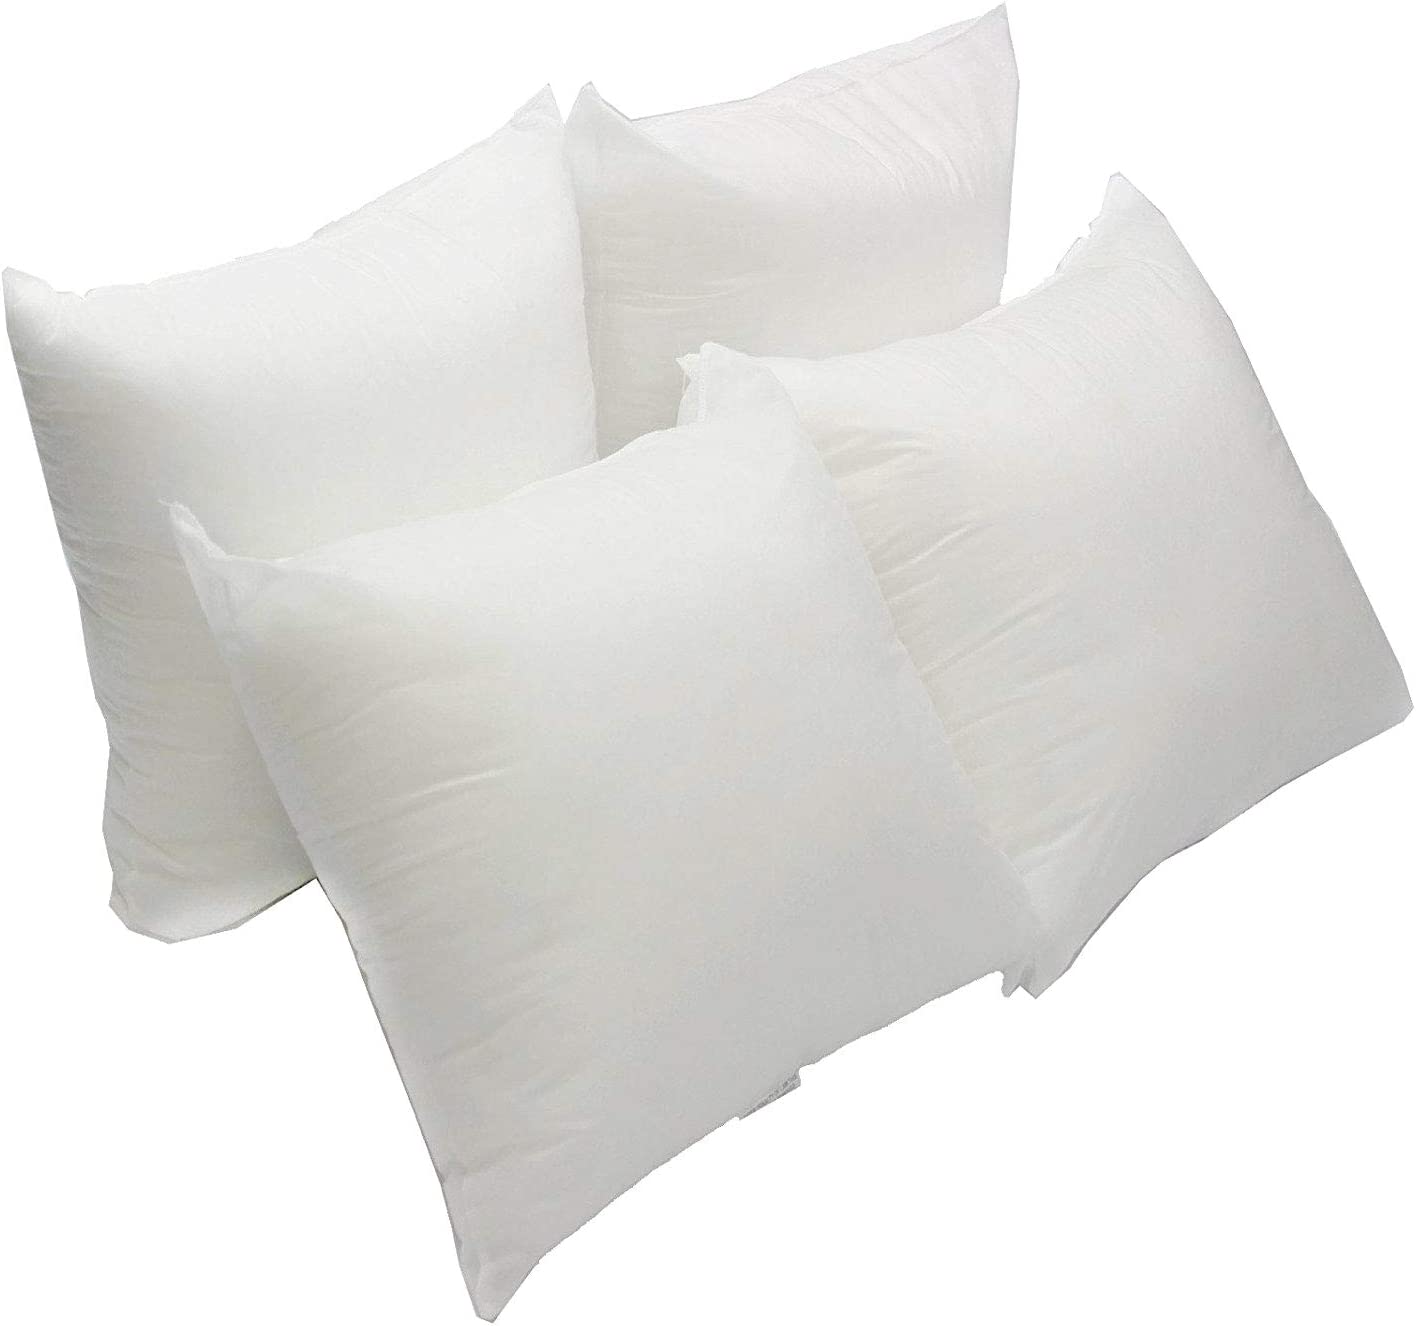 Mybecca 4 Pack Premium Stuffer Pillow Insert Sham Square Form Polyester, Standard/White 26" x 26"